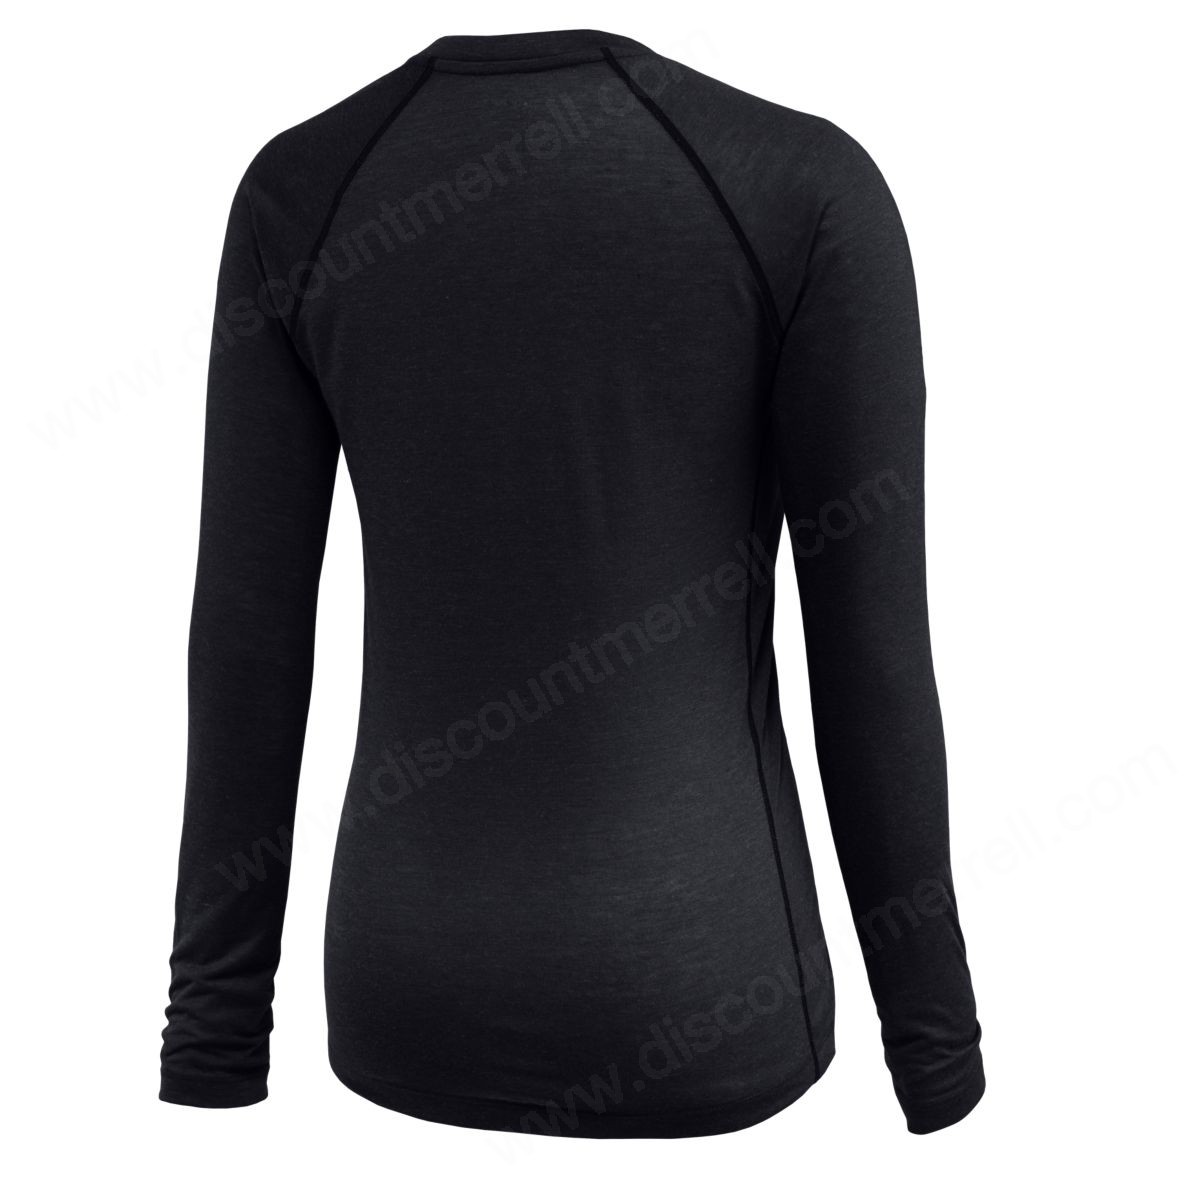 Merrell Women's Paradox Long Sleeve Tech Shirt With Drirelease® Fabric Black Heather - -1